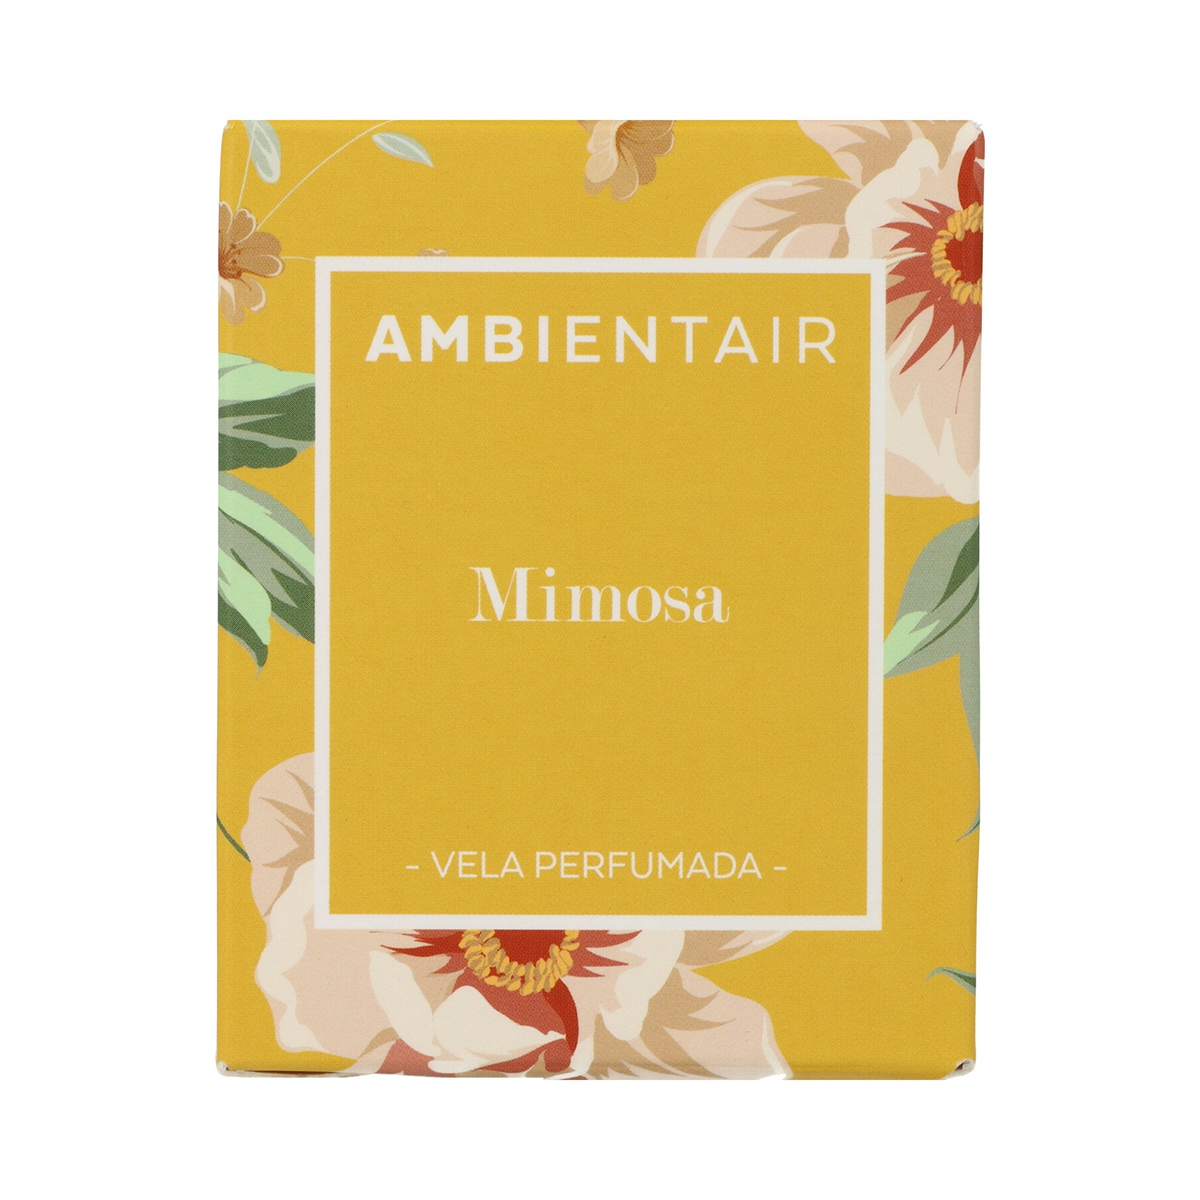 Vela 30h Mimosa Floral AMBIENT AIR 1 ud